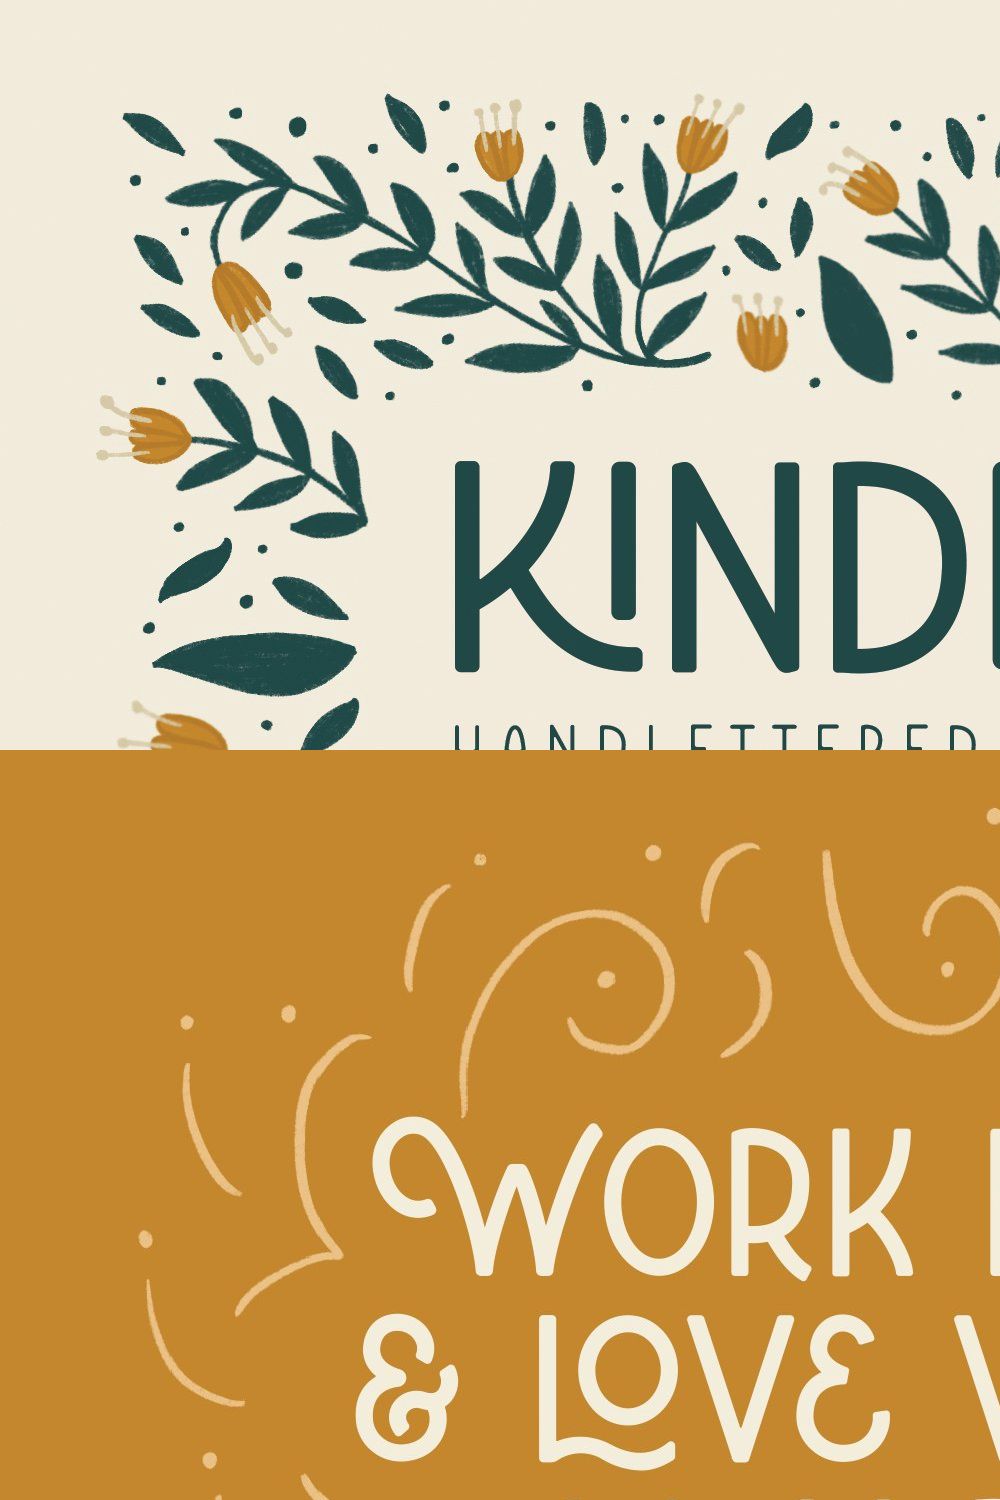 Kindred Handlettered Typeface pinterest preview image.